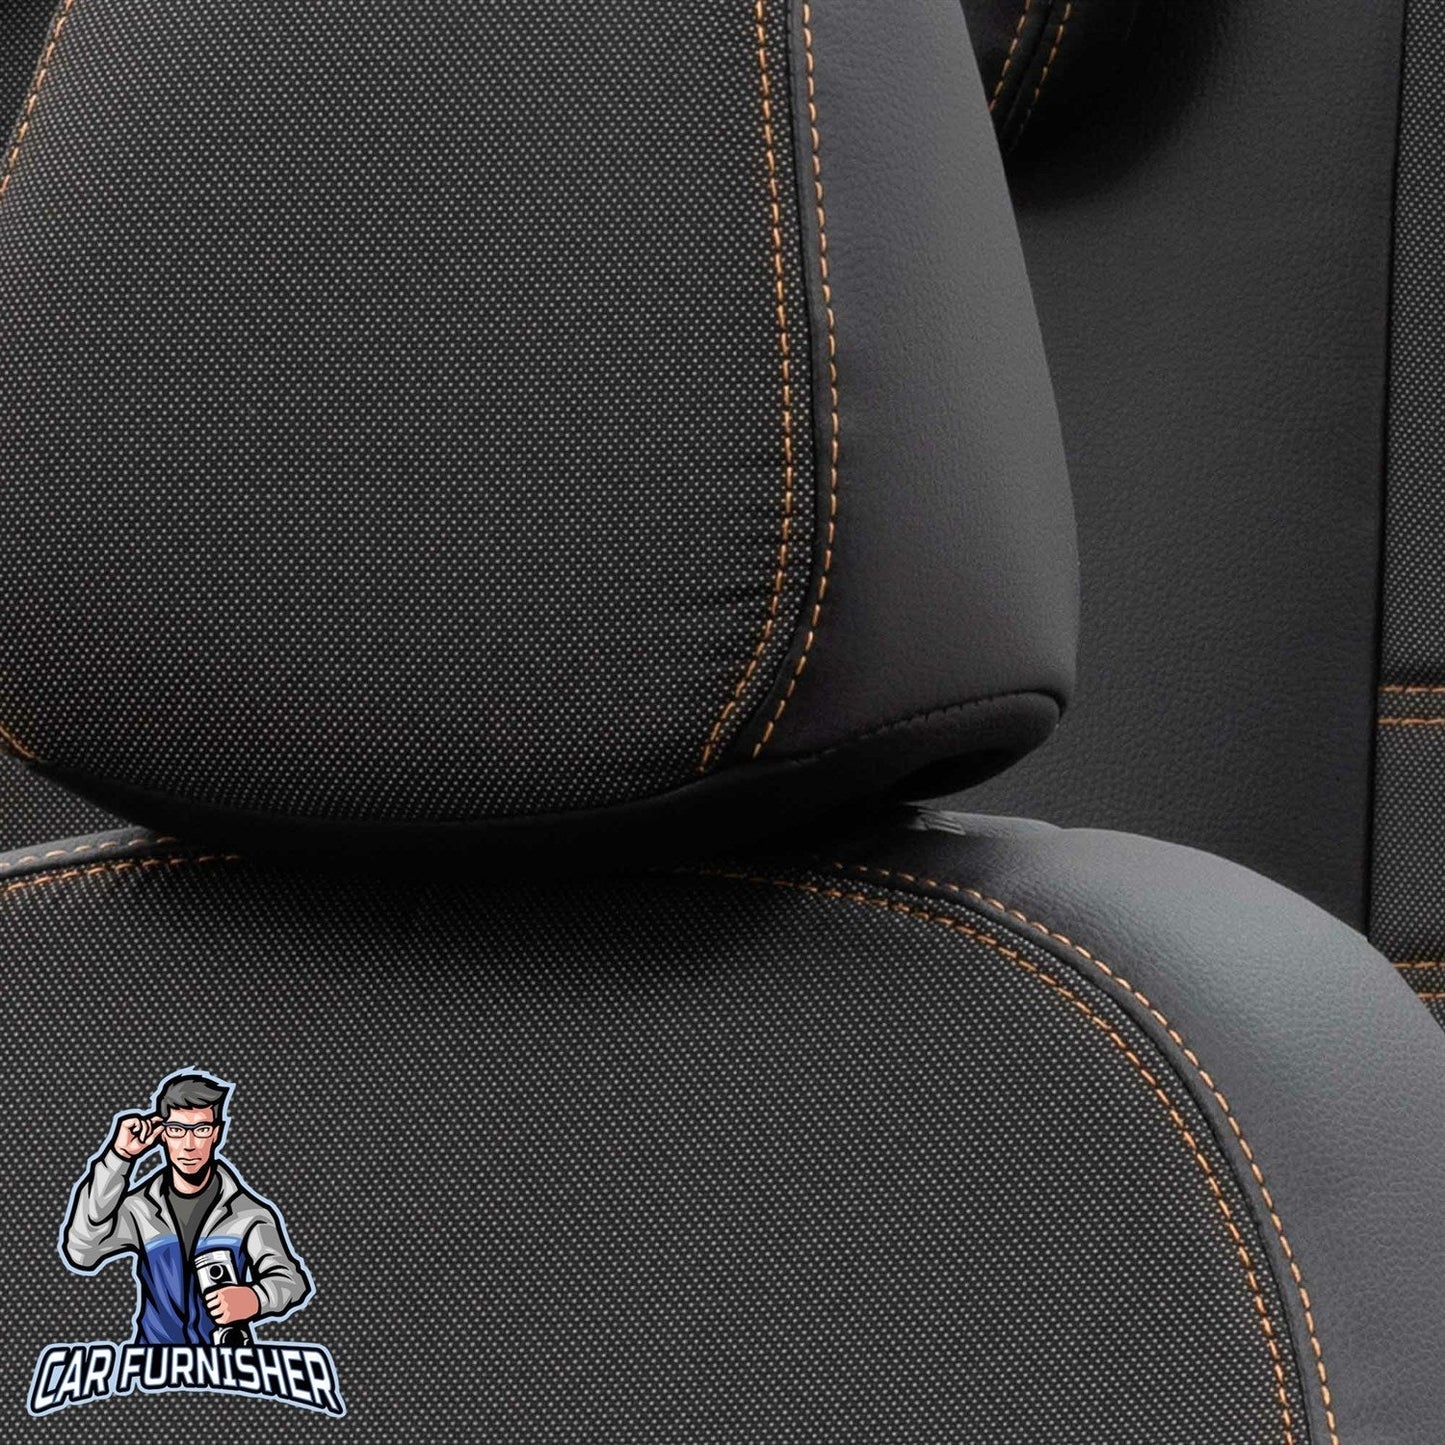 Peugeot 207 Seat Covers Paris Leather & Jacquard Design Dark Beige Leather & Jacquard Fabric